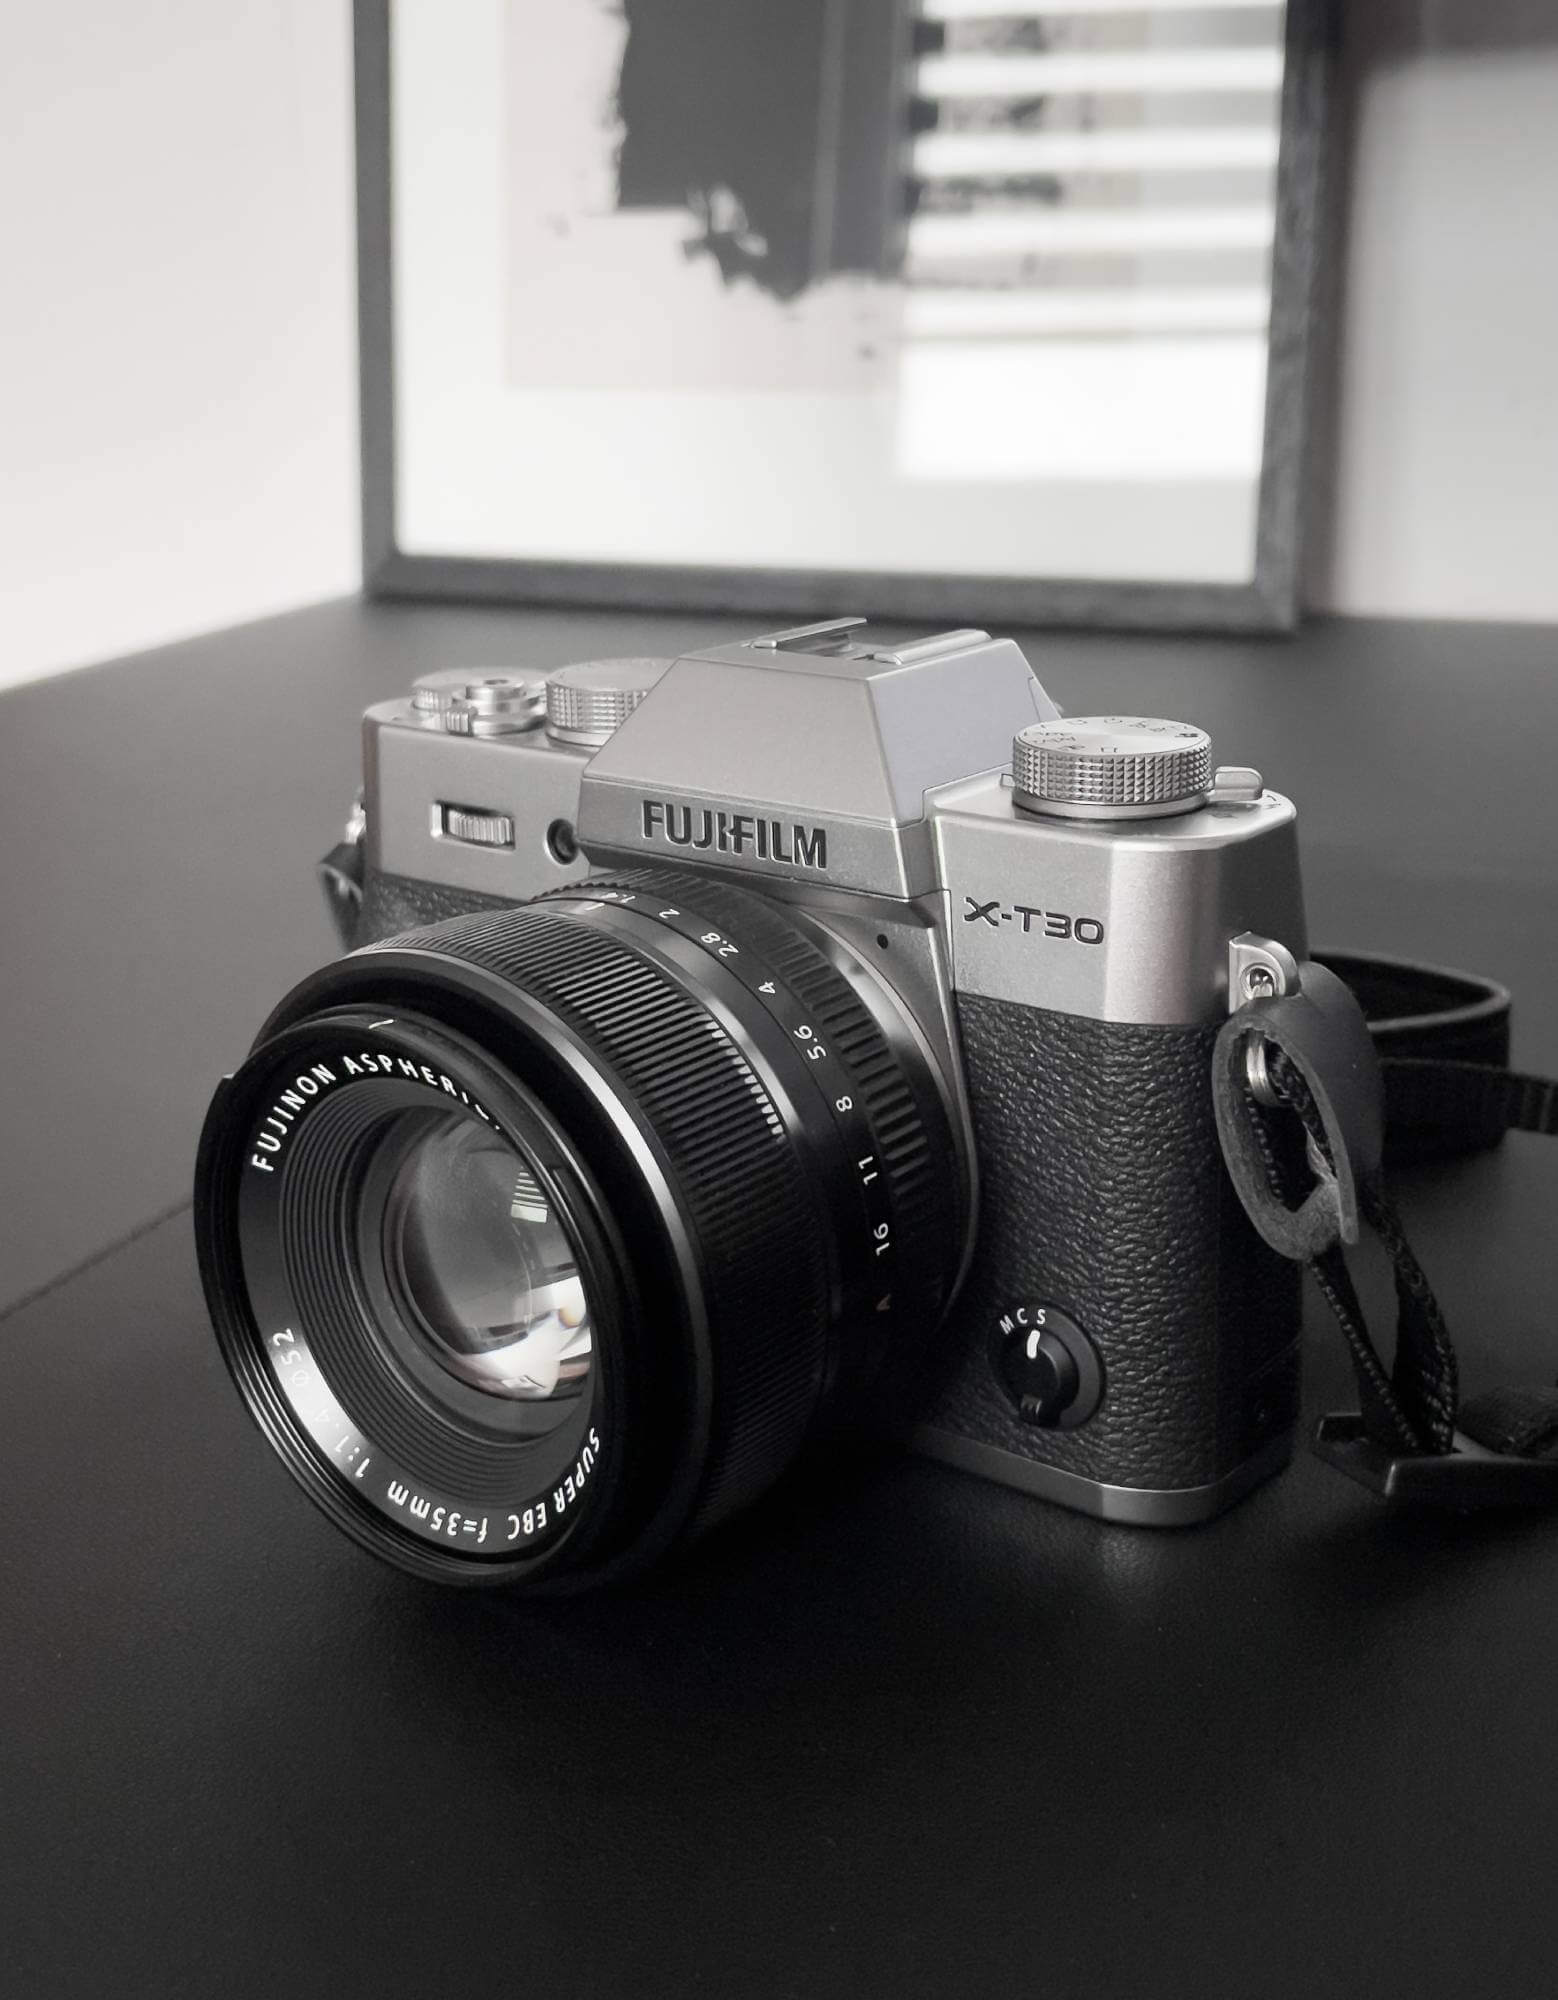 Fujifilm X-T30 camera